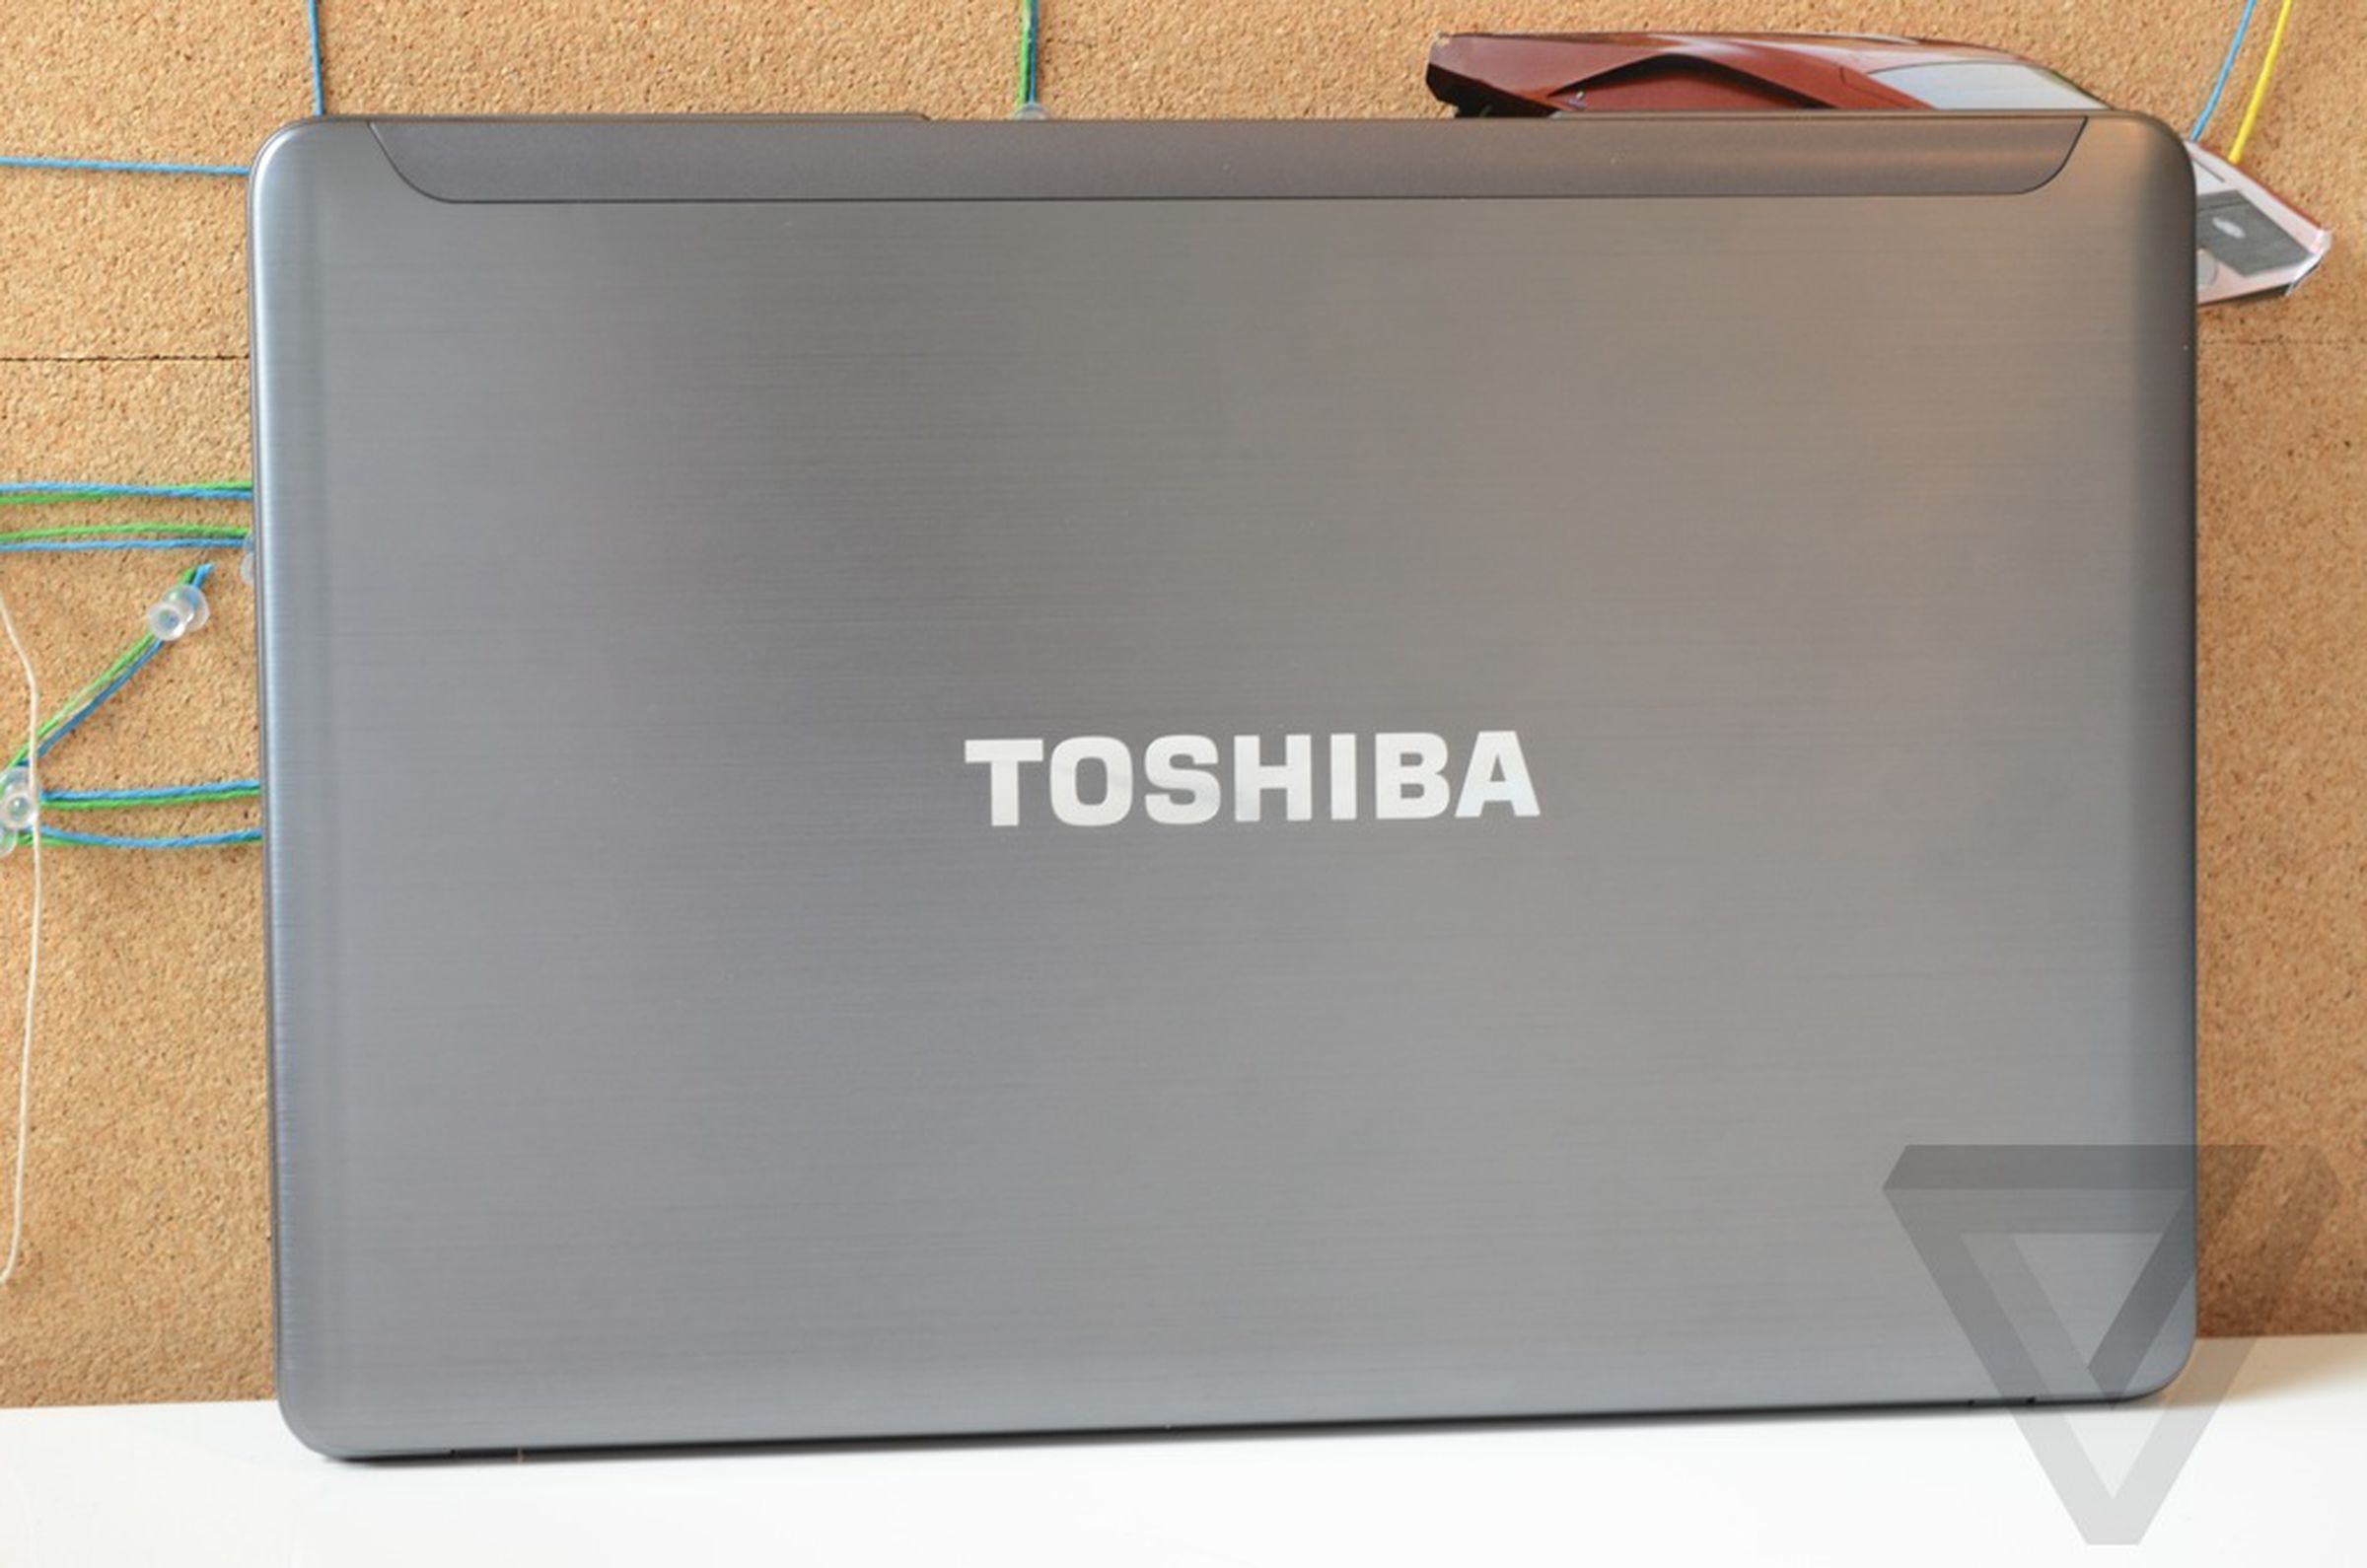 Toshiba Satellite U845 and U845W pictures